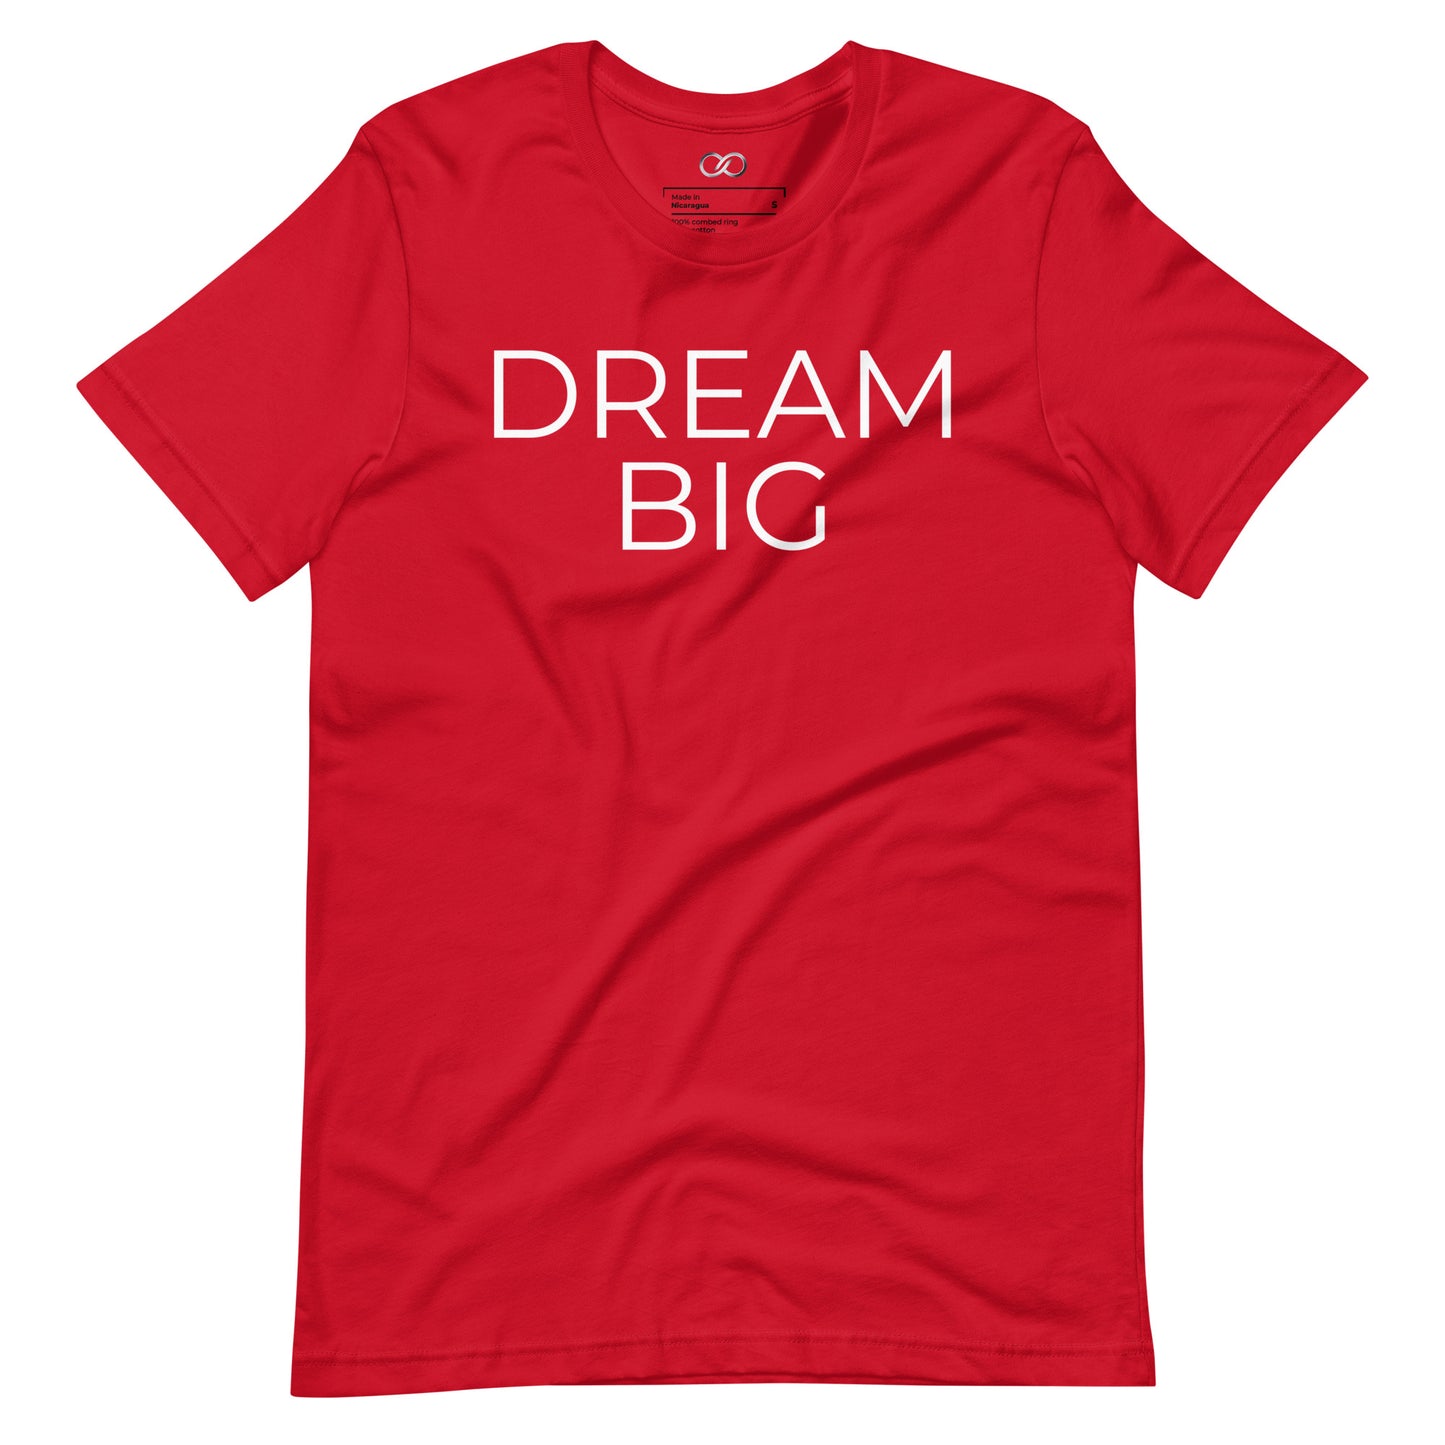 Dream Big T-Shirt - Inspirational Typography Tee